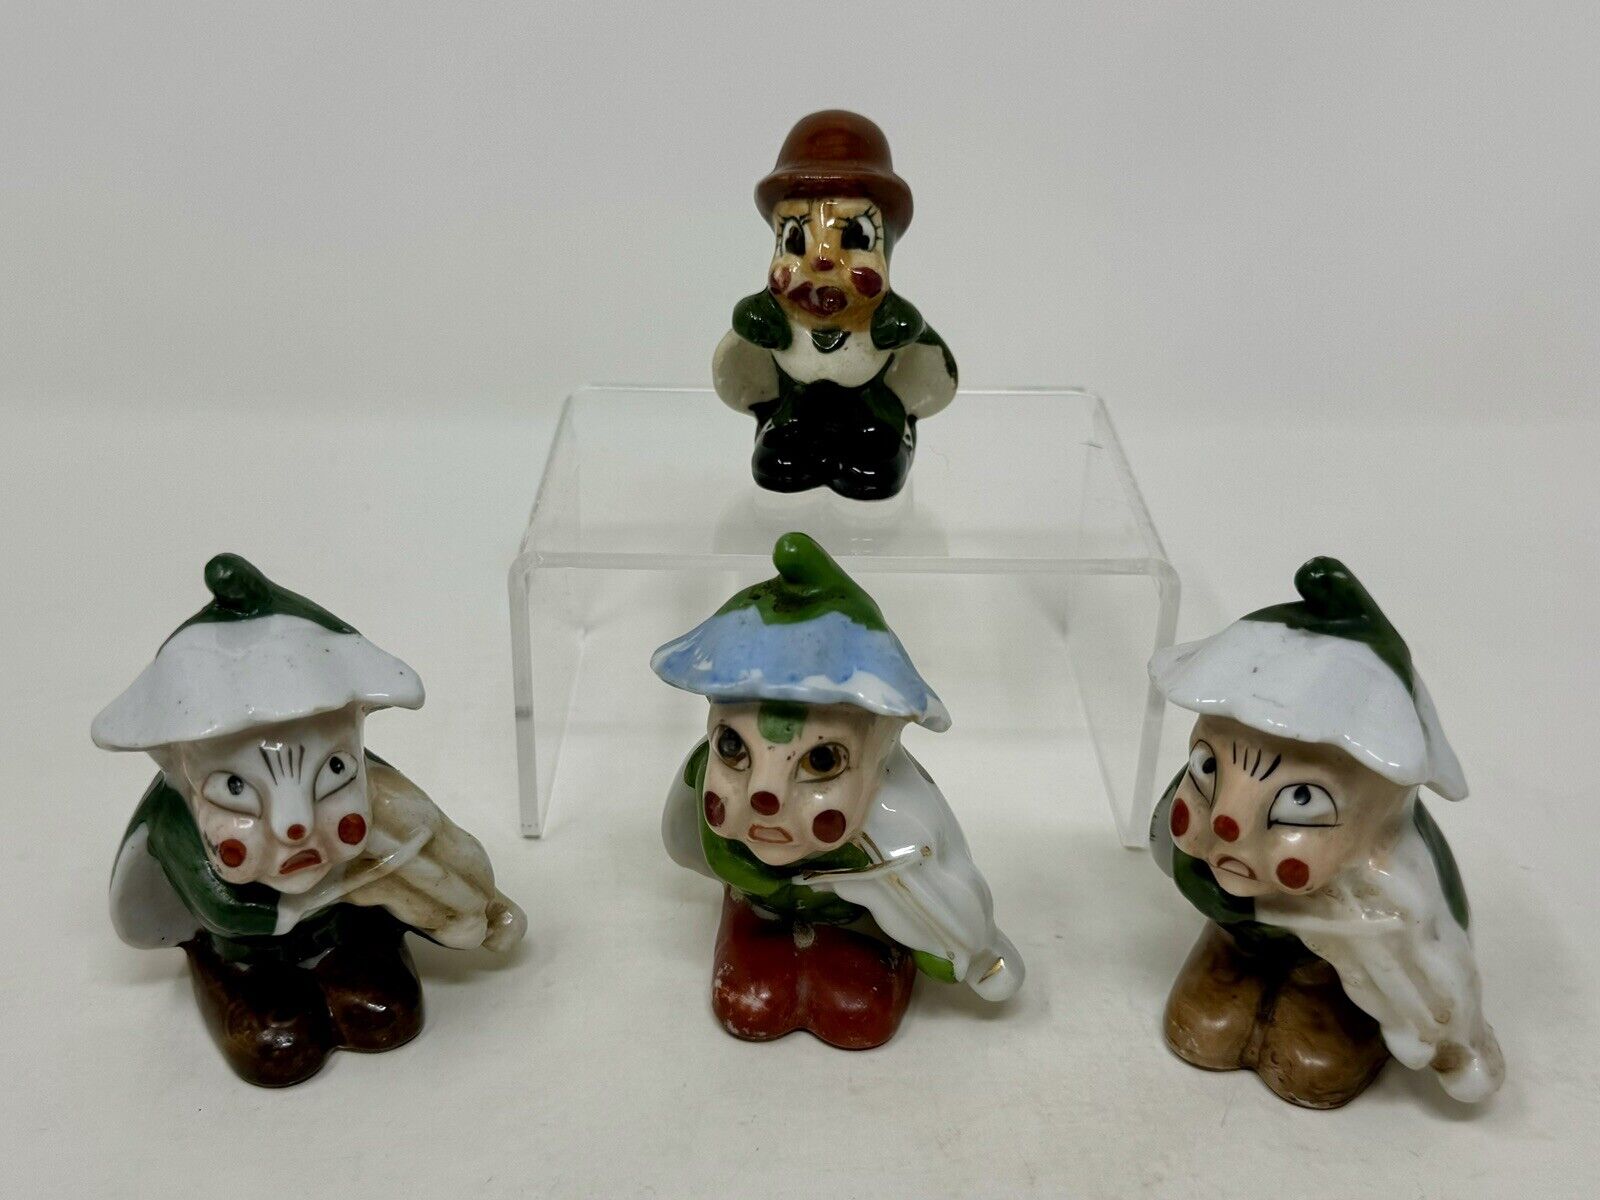 4 Vintage Anthropomorphic Ladybug Pixie Musician Figurines OCCUPIED JAPAN